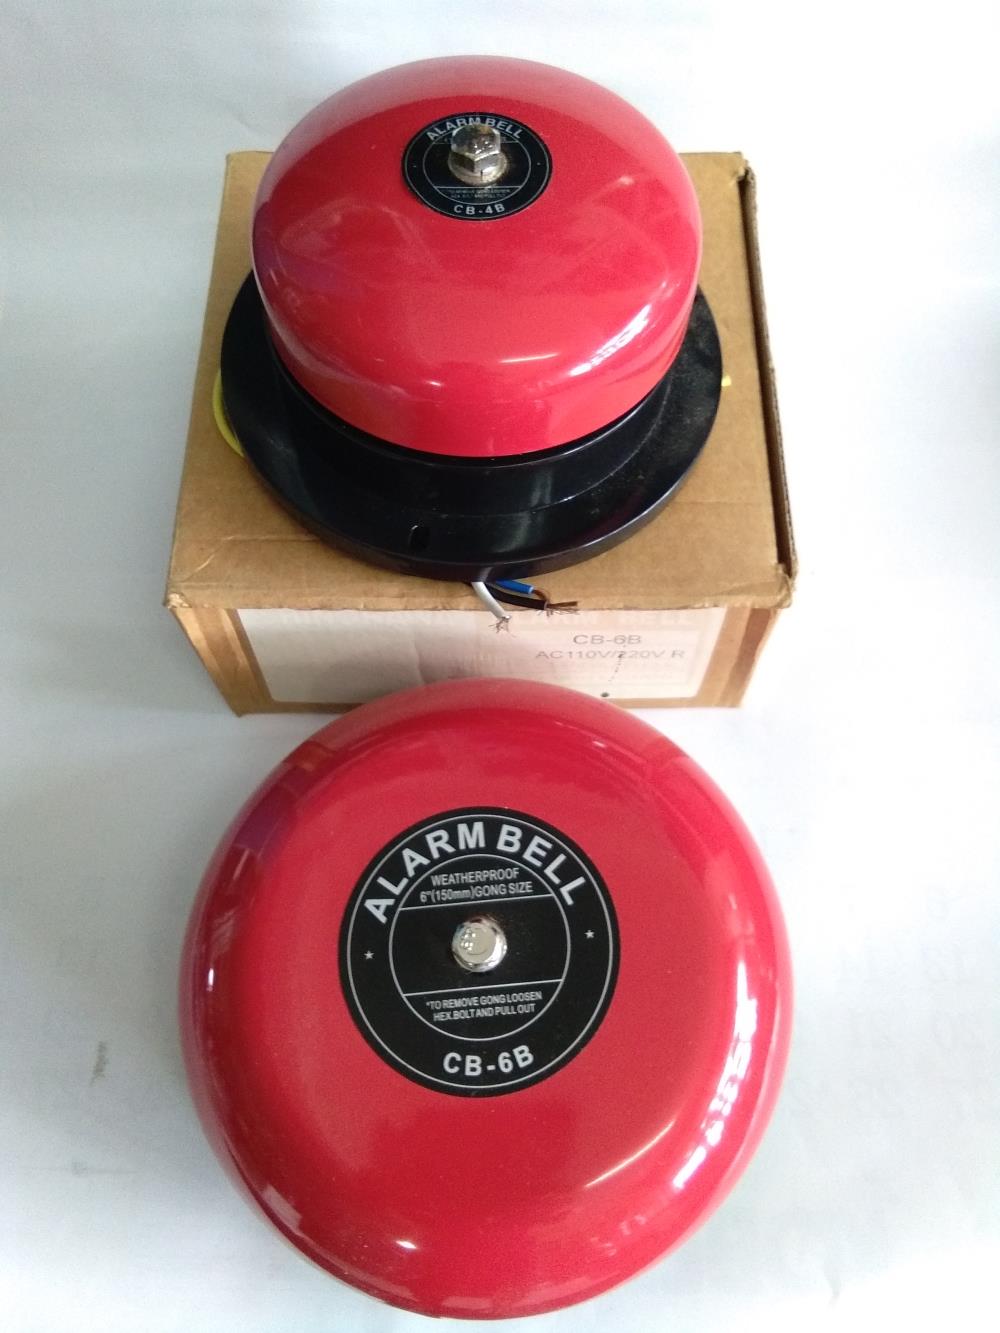 Shinohawa : Alarm bell : กระดิ่งแดง CB-04B ,CB-06B , 110V/220V/12/24VDC **ราคา 4"=350.- / 6"=570.-**,นครราชสีมา shinohawa alarm bell กระดิ่งแดง CB-04B CB-06B ออดไฟฟ้า โคราช,,Instruments and Controls/Alarms